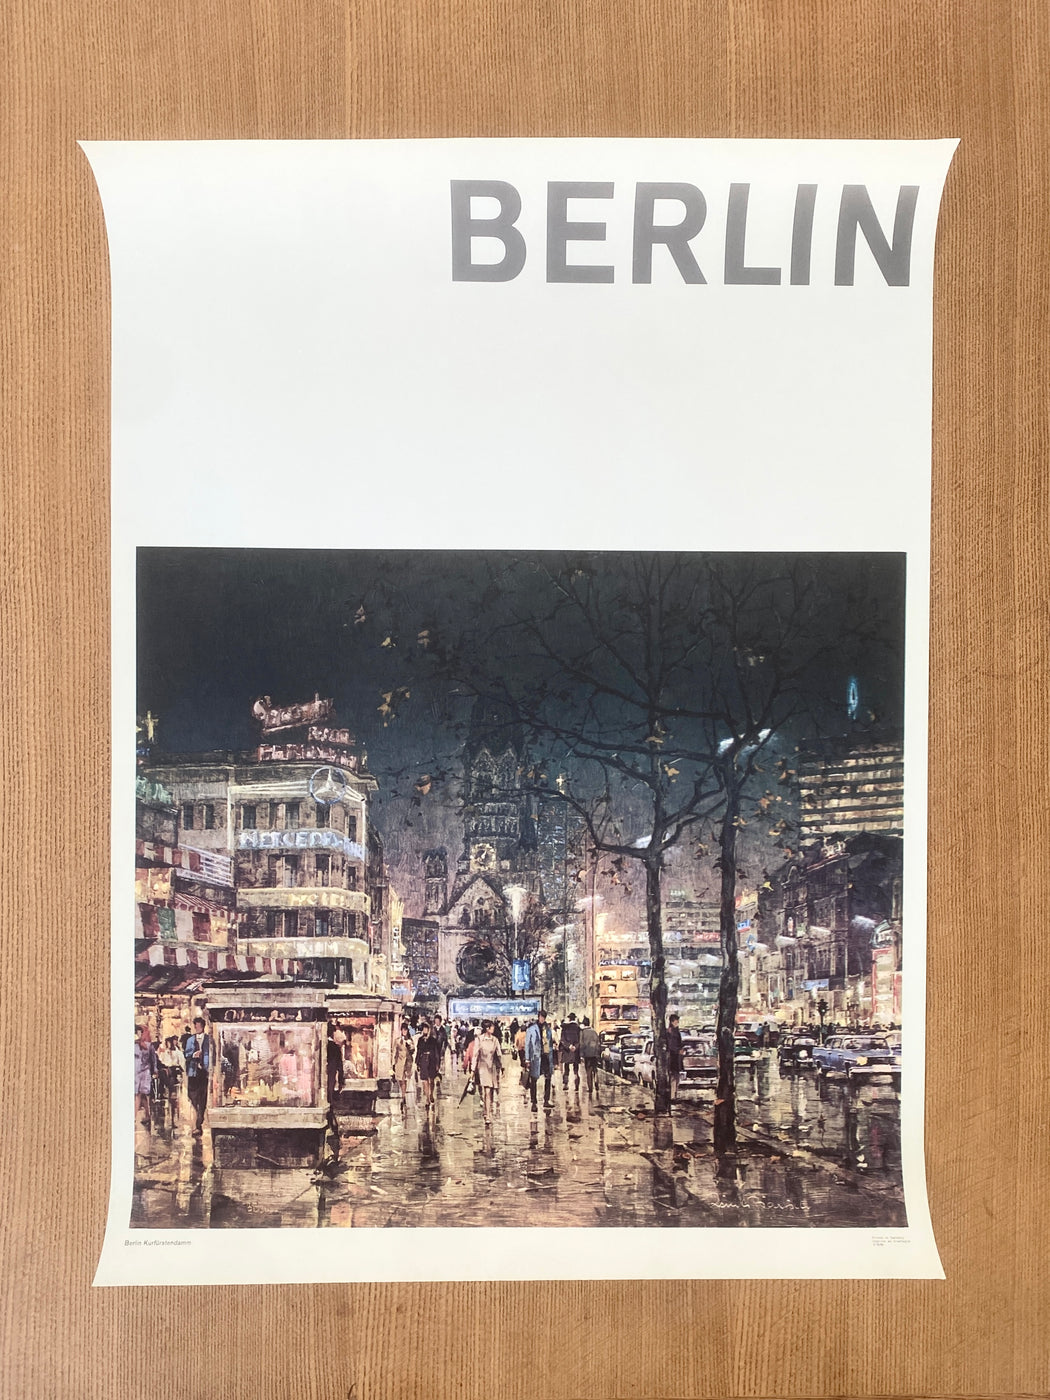 Berlin 1969 Poster